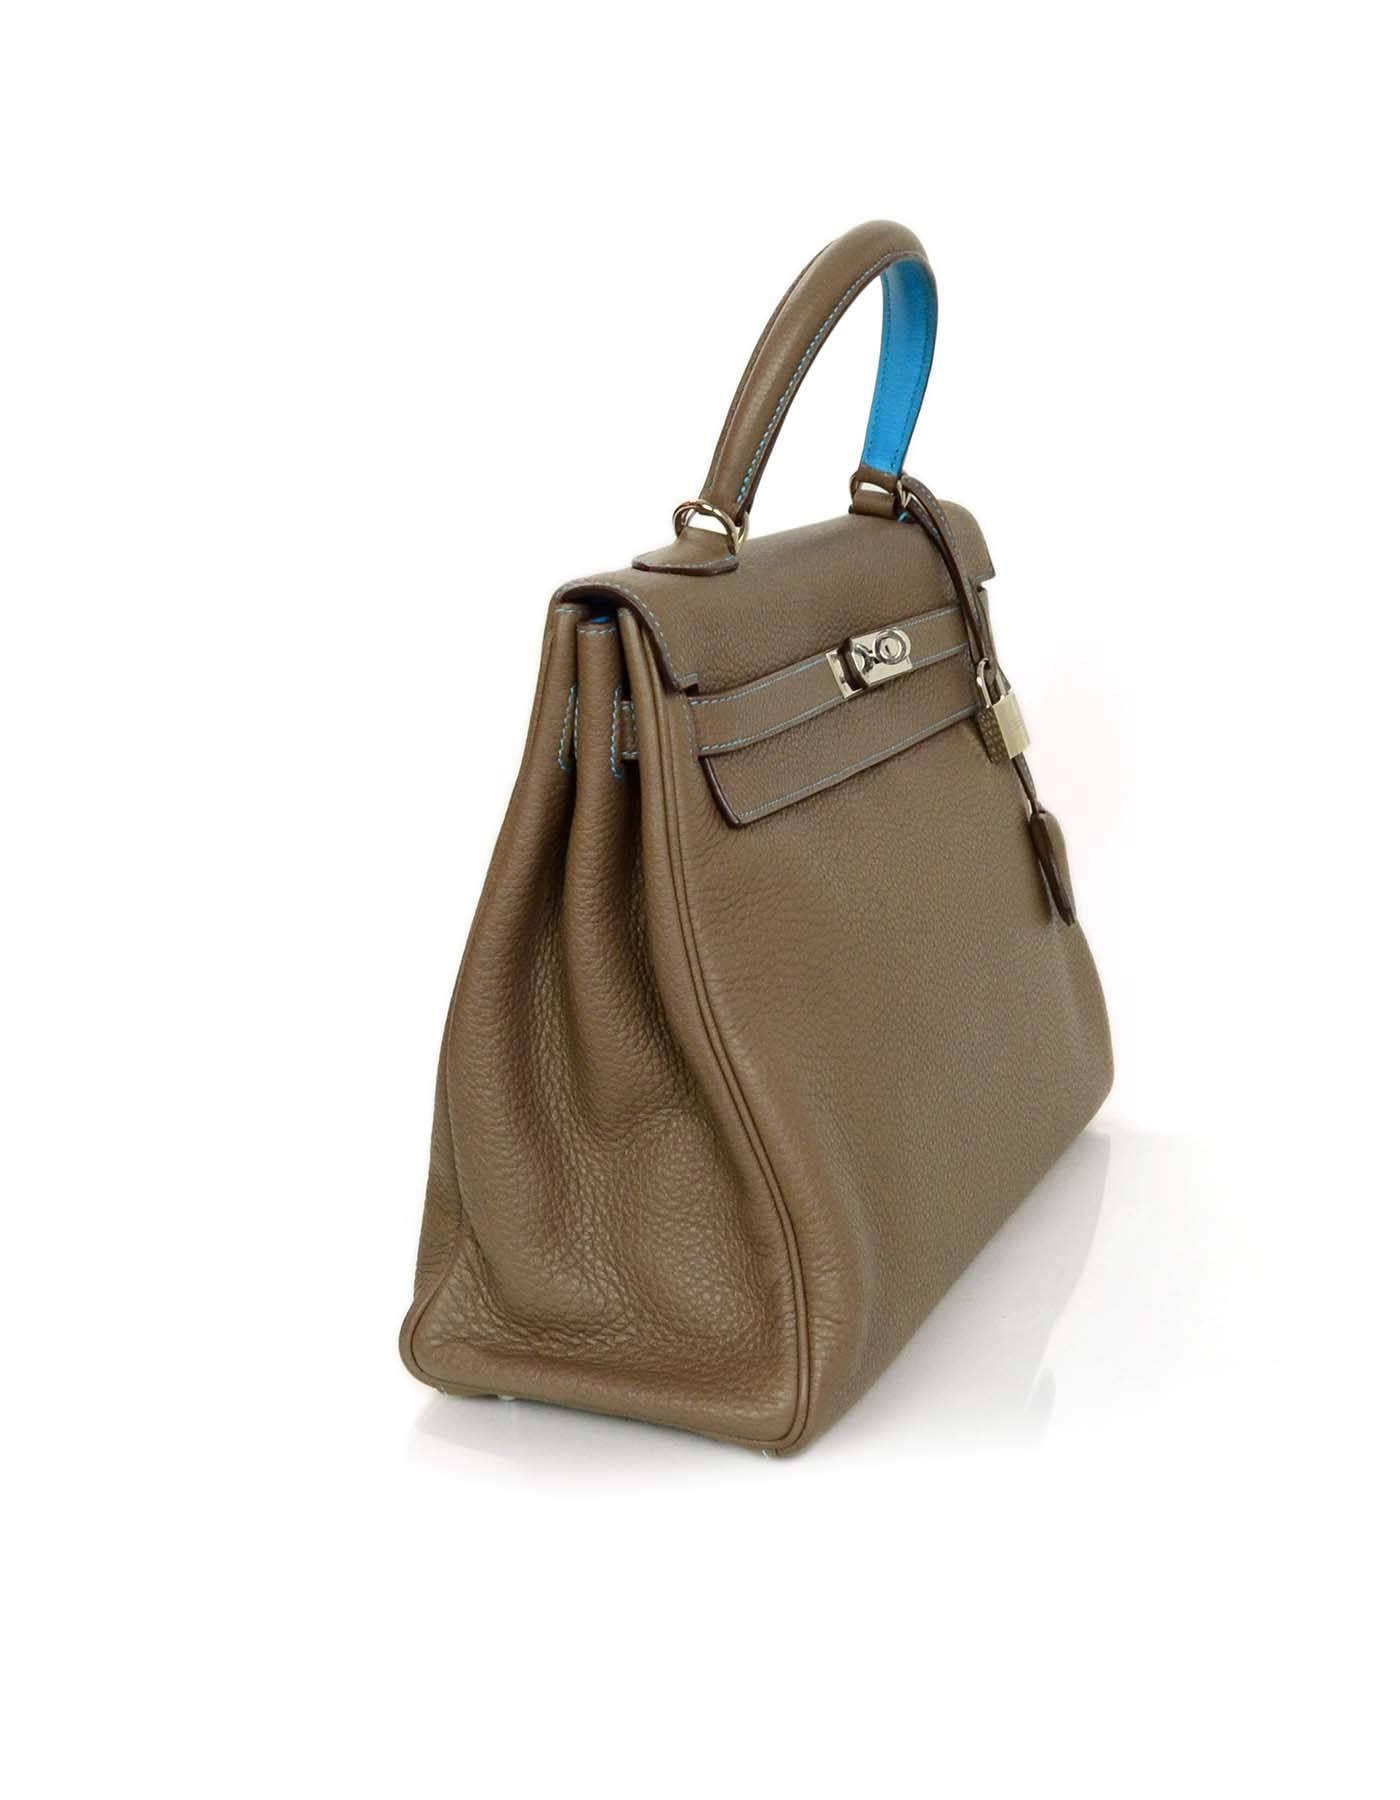 100% Authentic Hermes Etoupe & Blue Aztec Togo 35cm Kelly Bag.  This bag was part of the 2010 